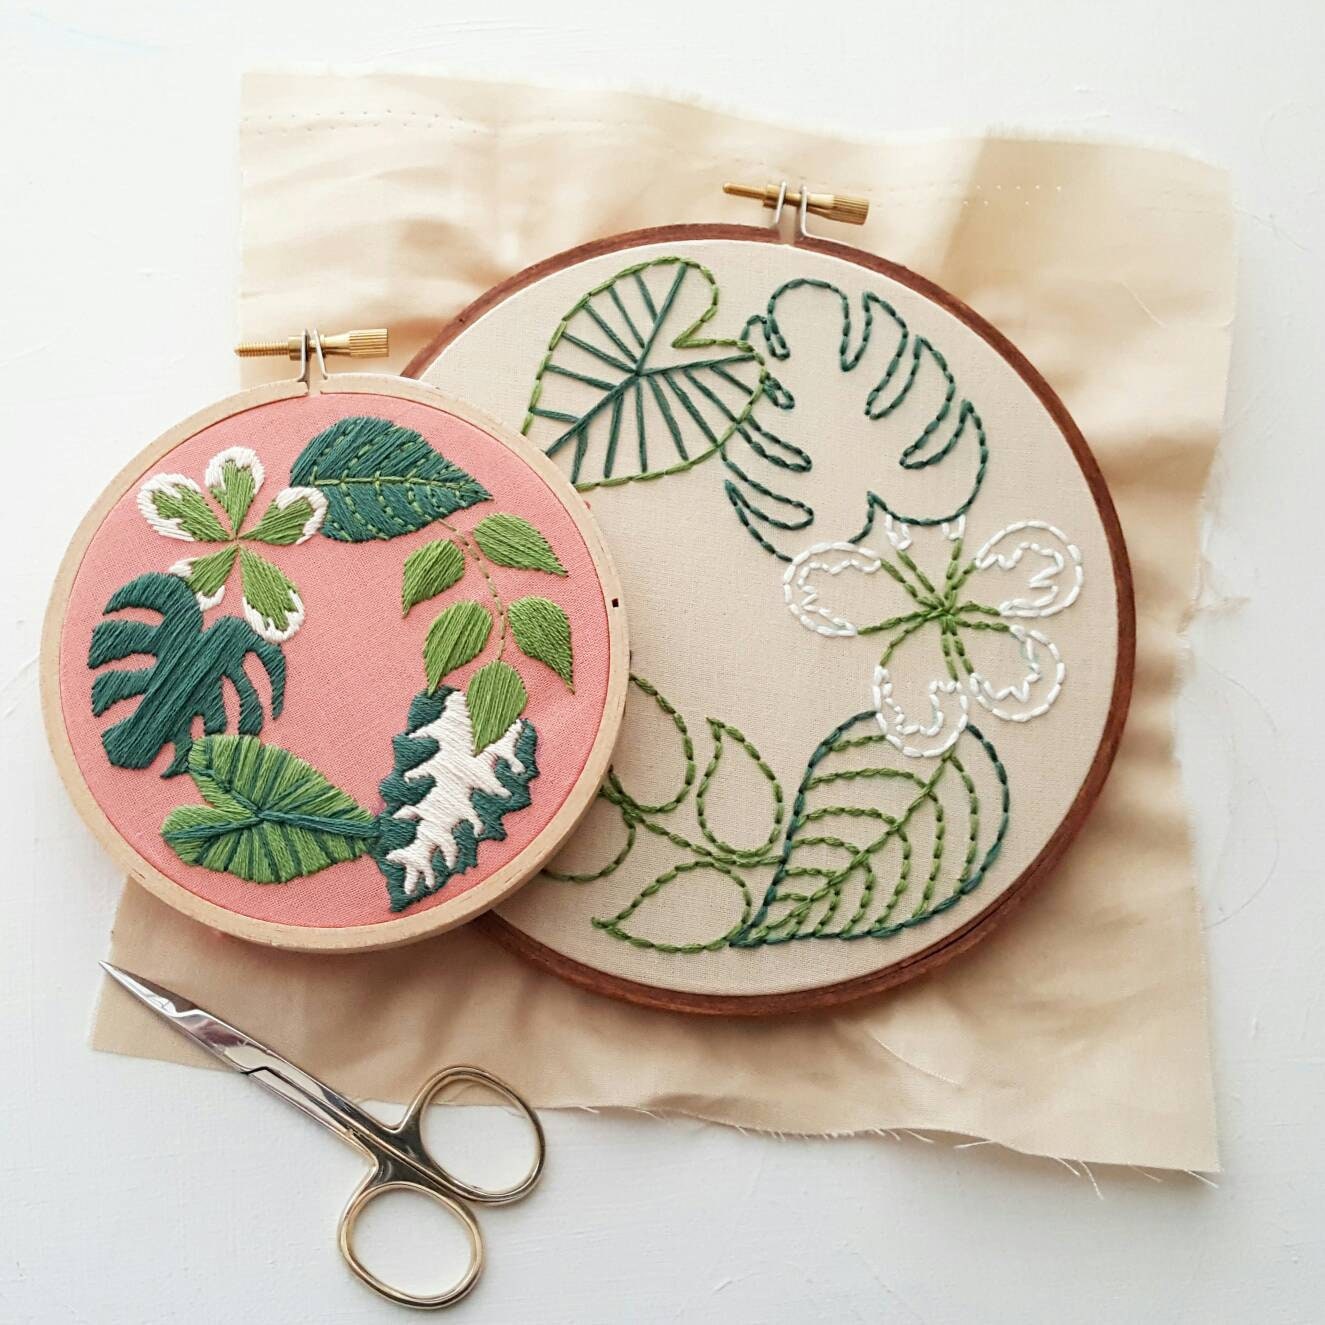 Love and Plants mini paper embroidery patterns by Mayuka Fiber Art - Maydel